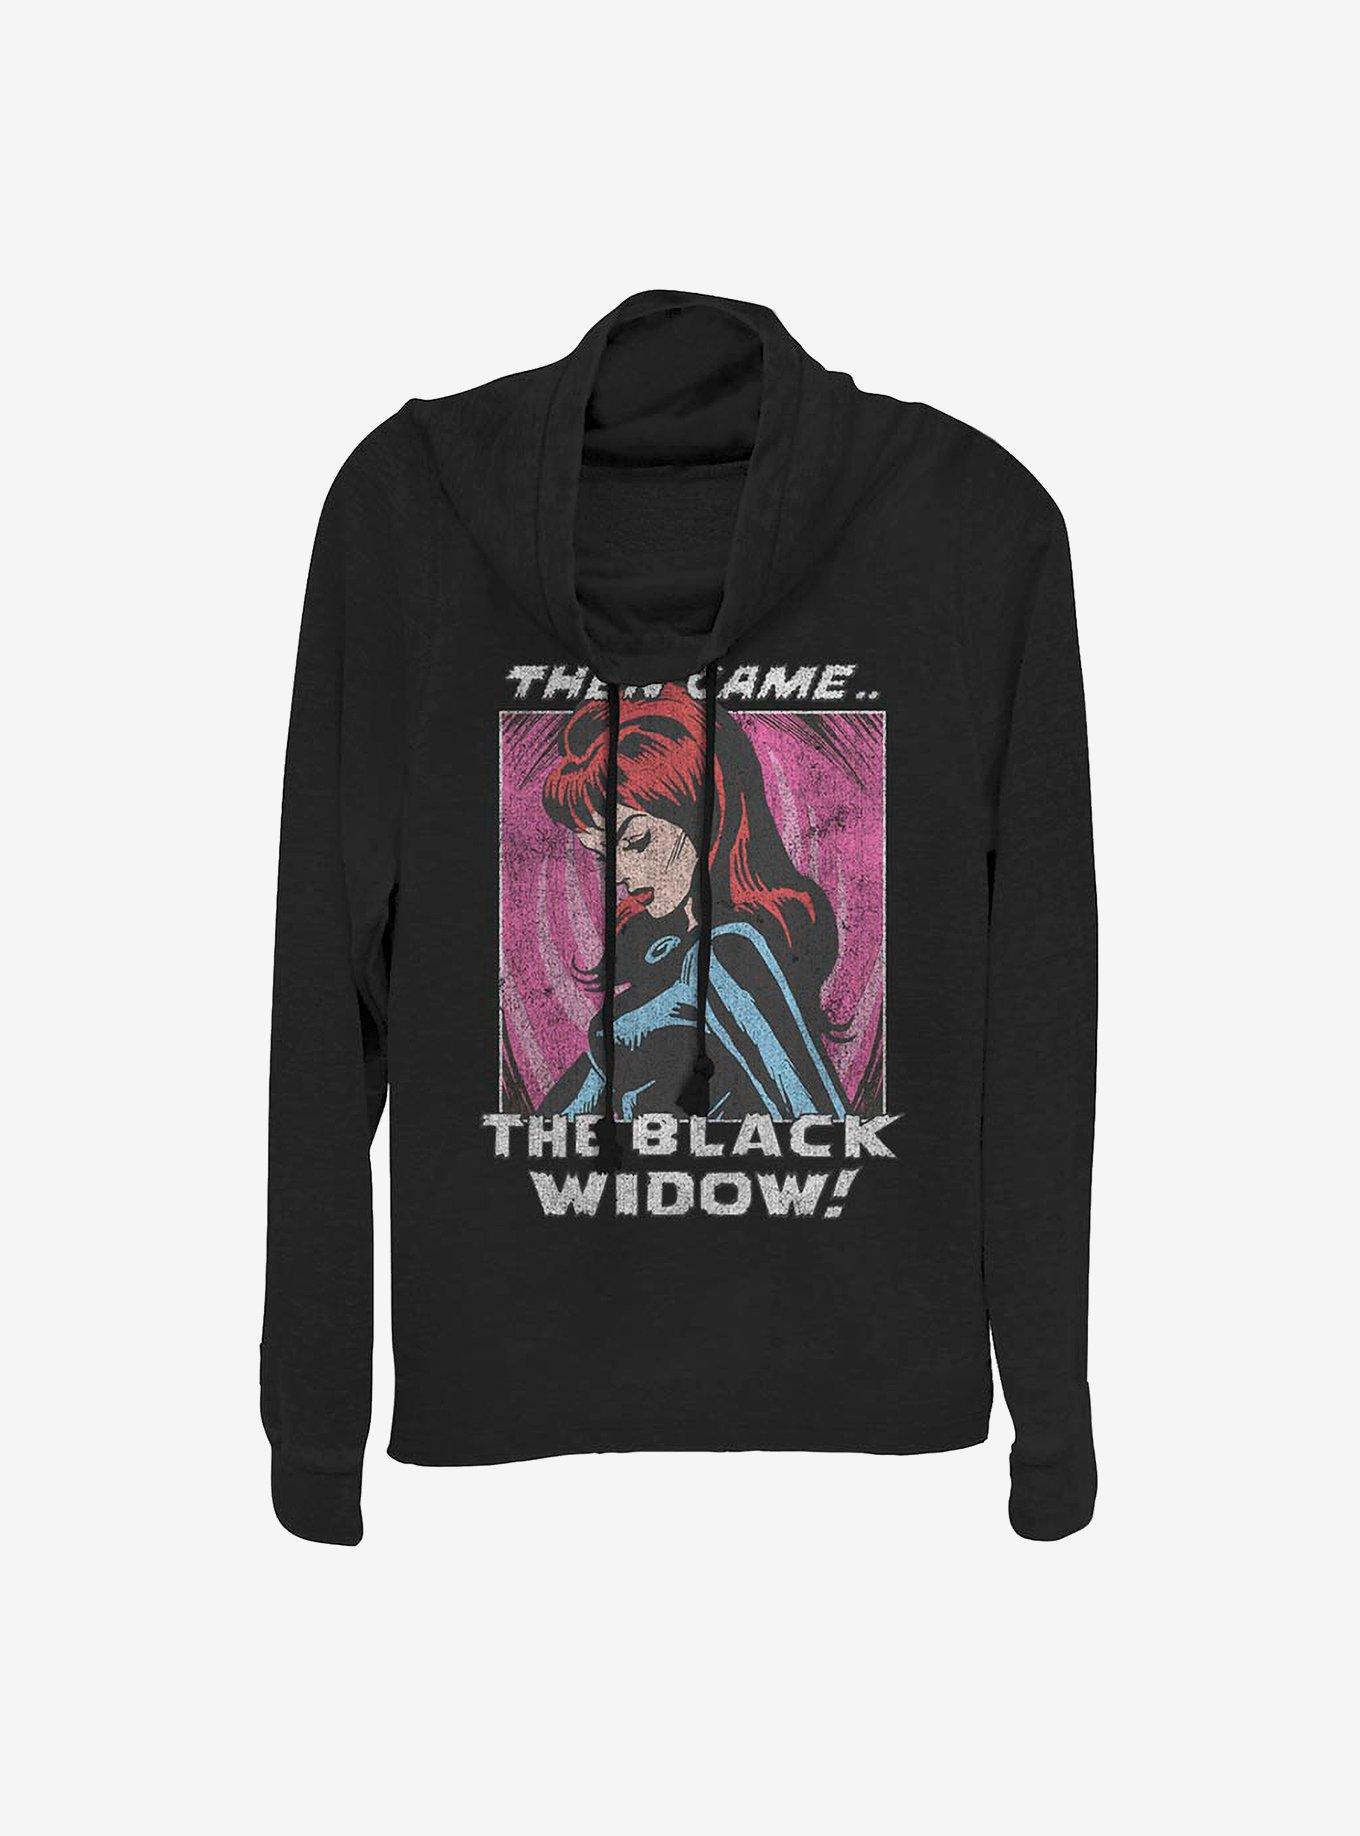 Marvel Black Widow Then Came.. Cowlneck Long-Sleeve Girls Top, BLACK, hi-res